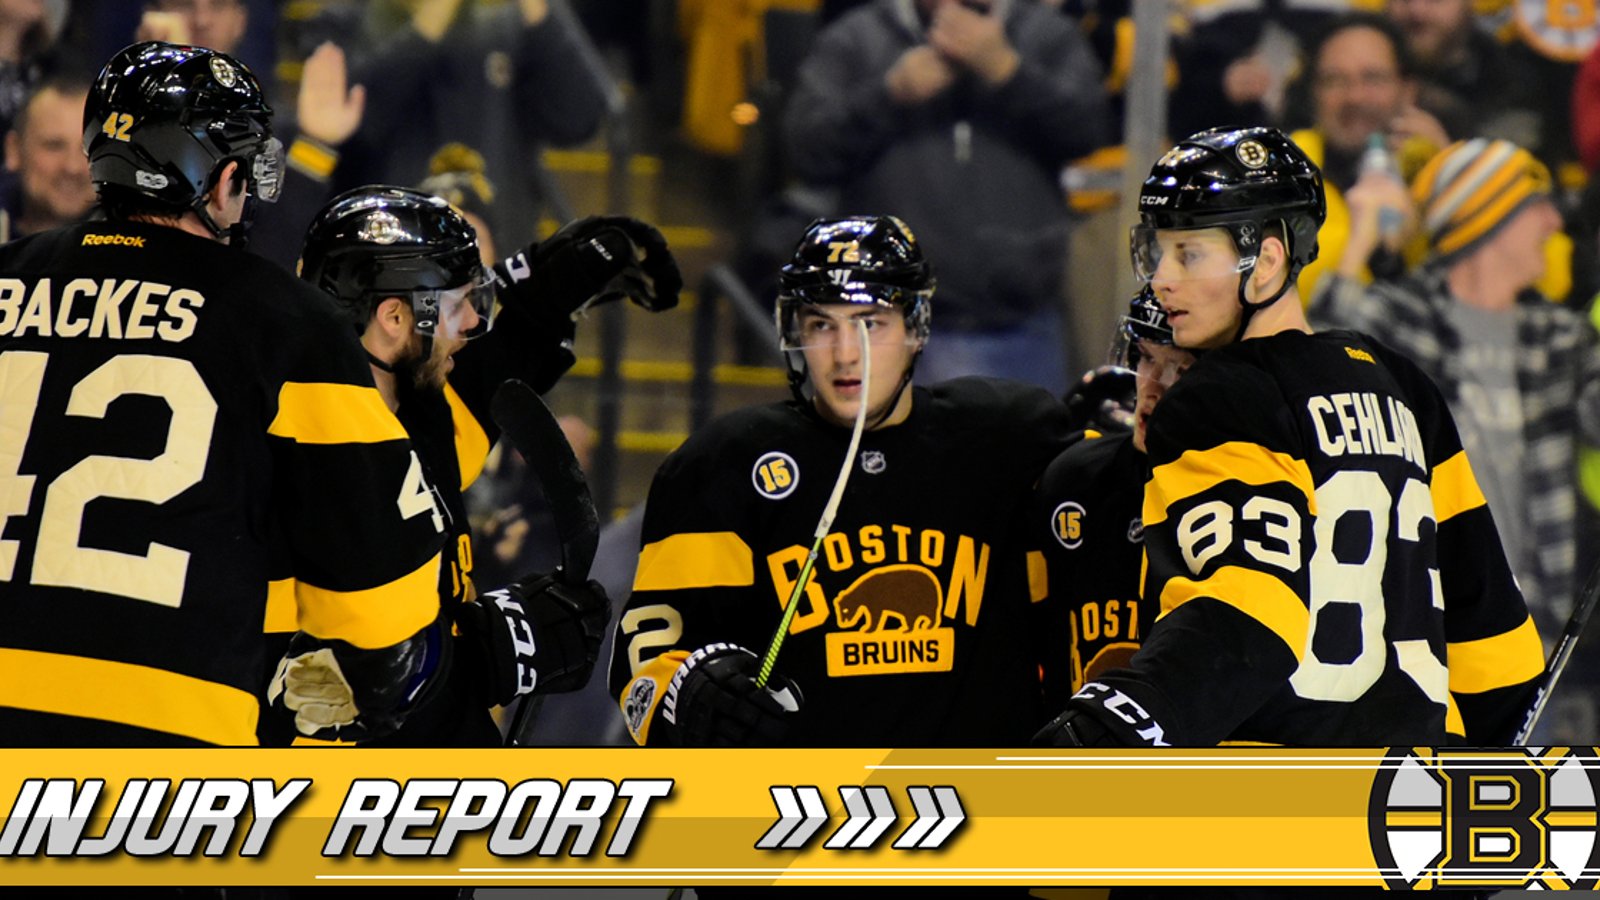 INJURY REPORT: Banged Up Bruins Suffer Another Devastating Injury